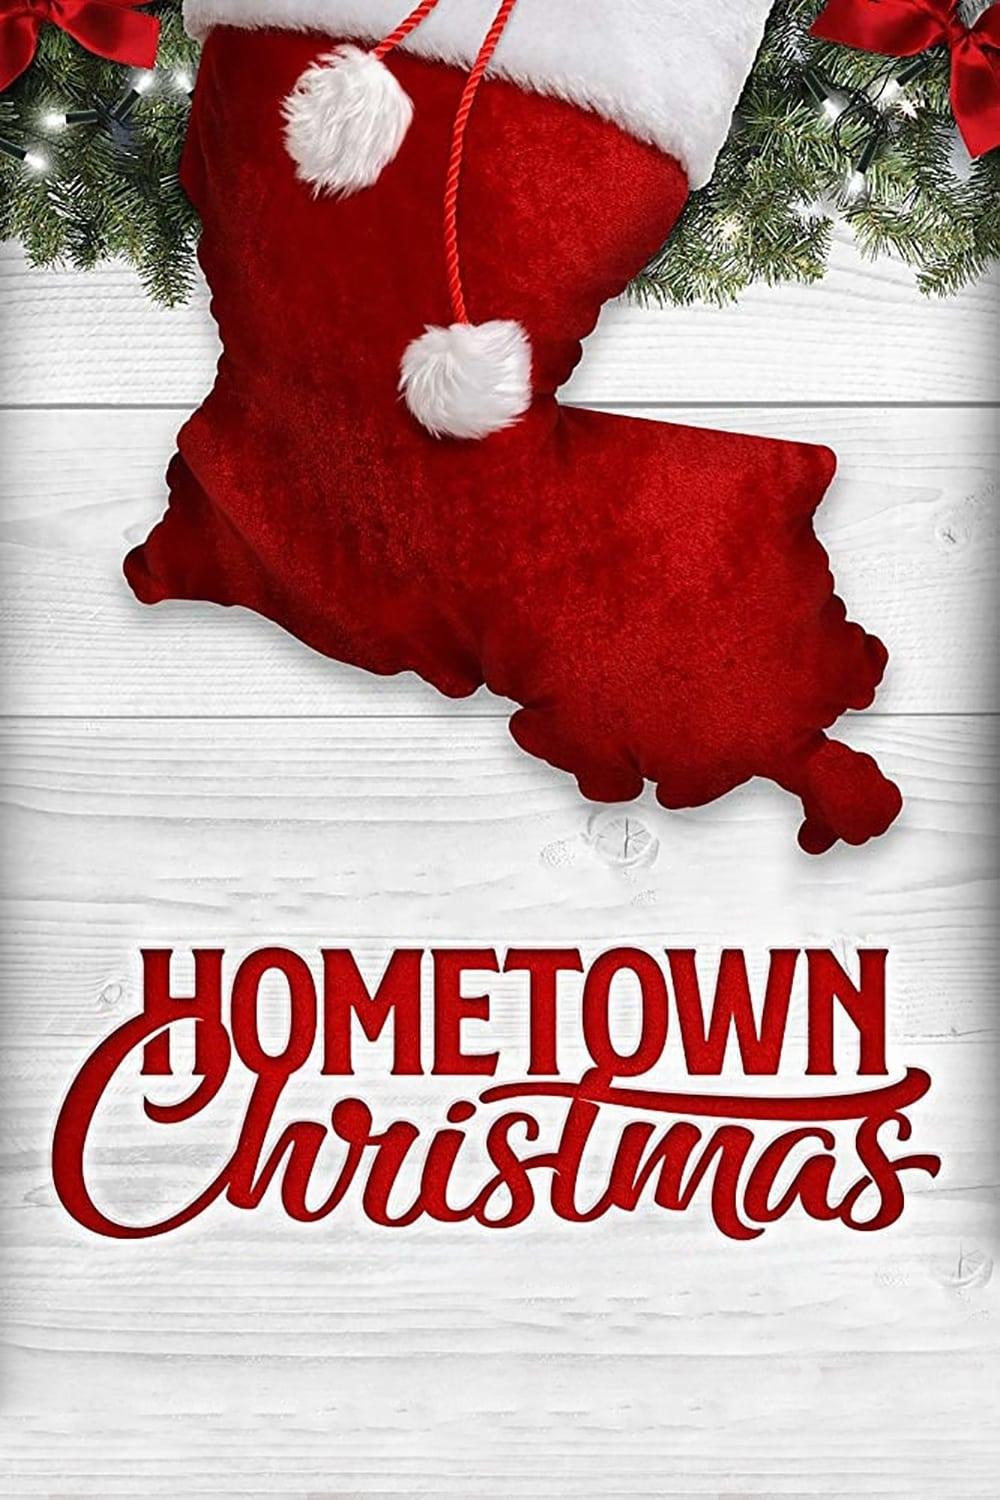 Hometown Christmas poster